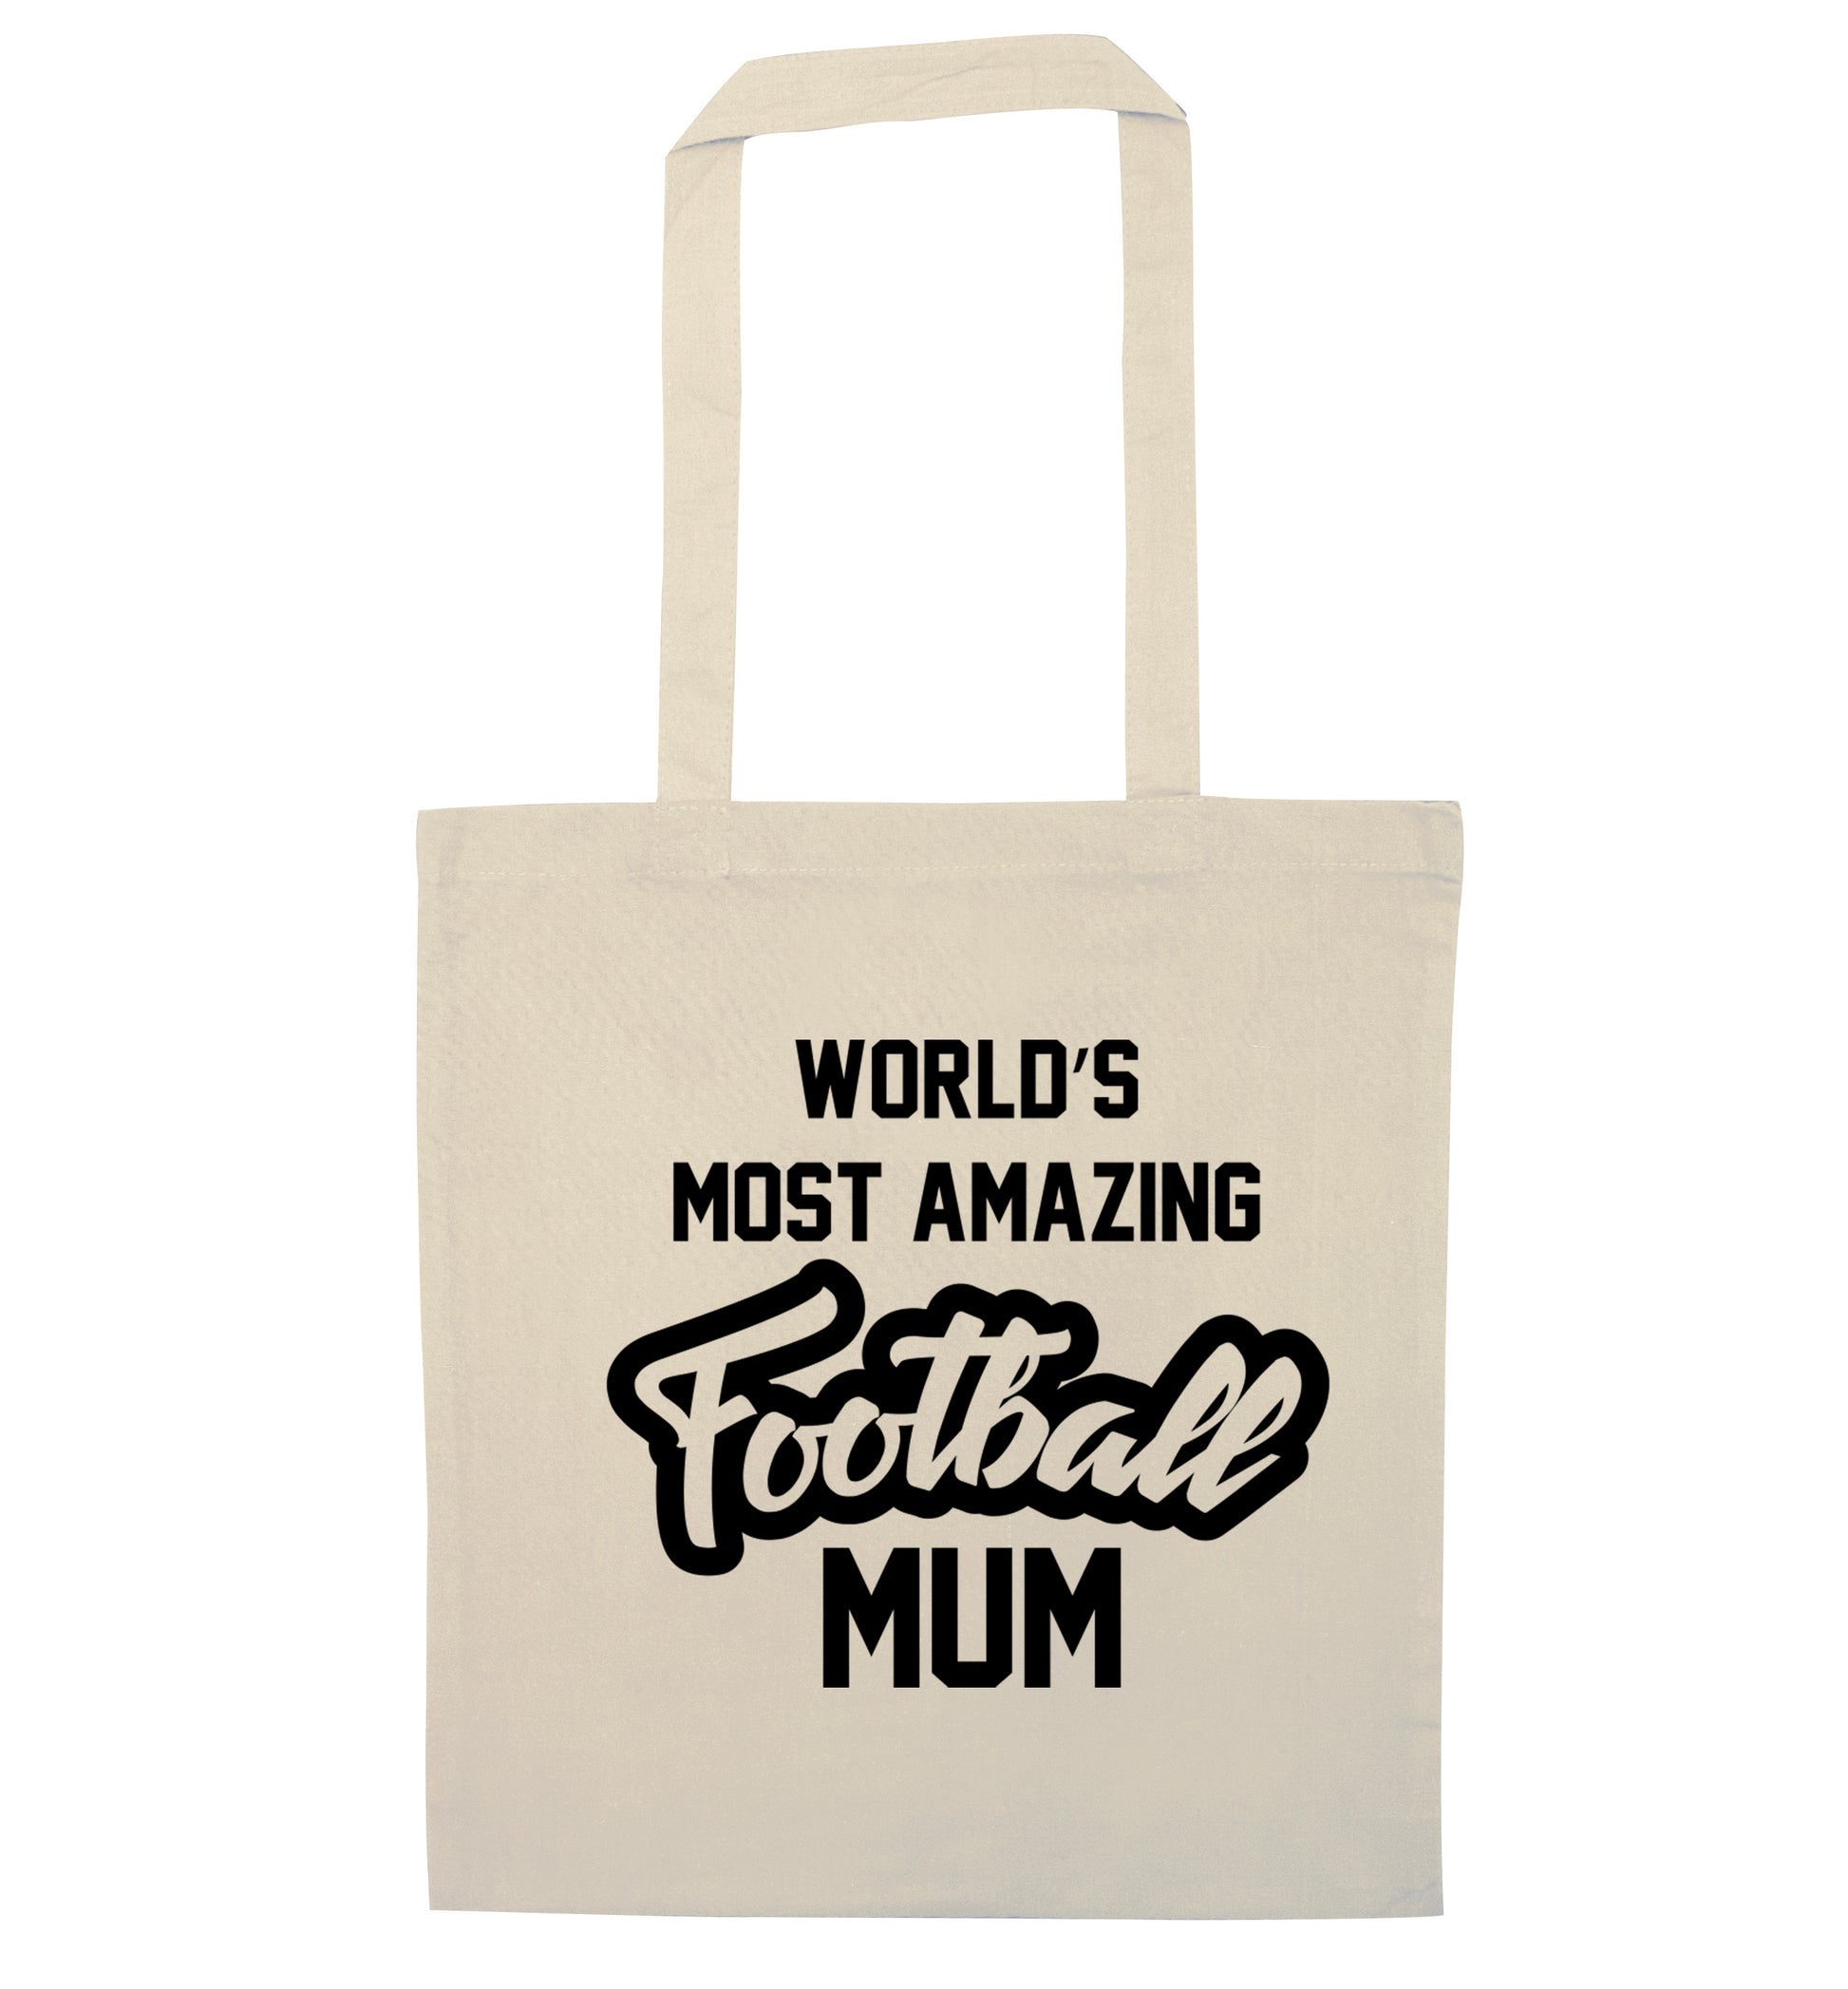 Worlds most amazing football mum natural tote bag